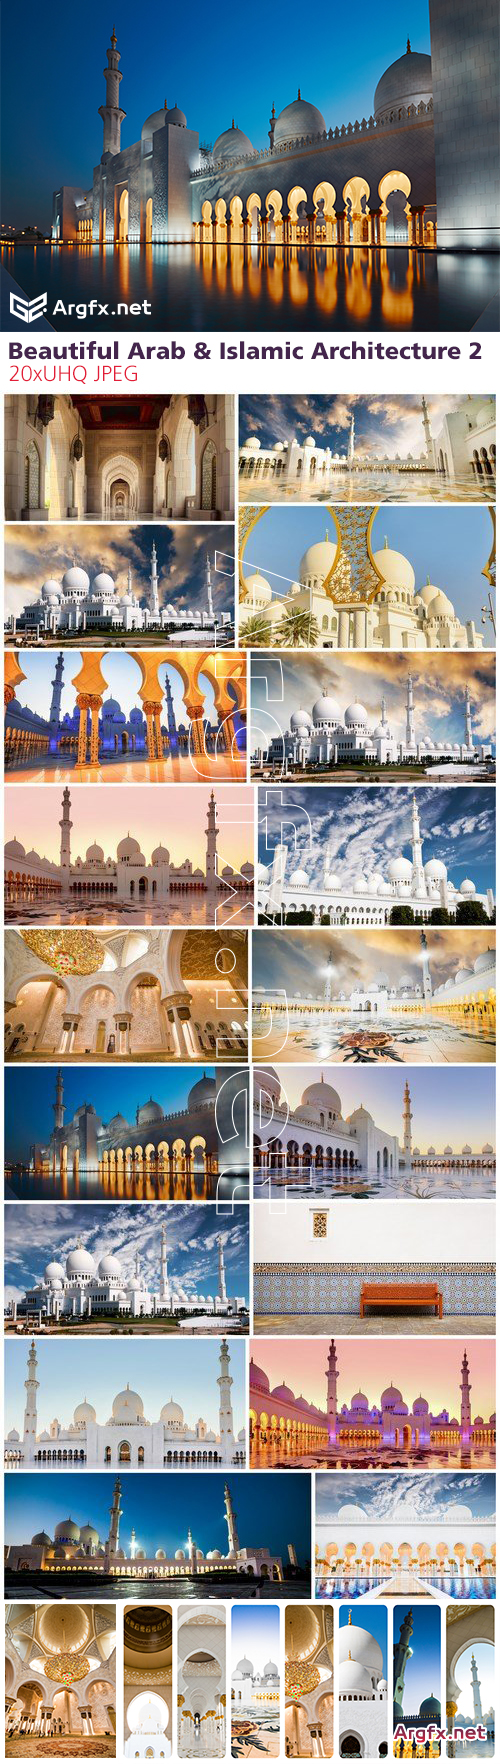  Beautiful arab & islamic architecture 2 - 20xUHQ JPEG